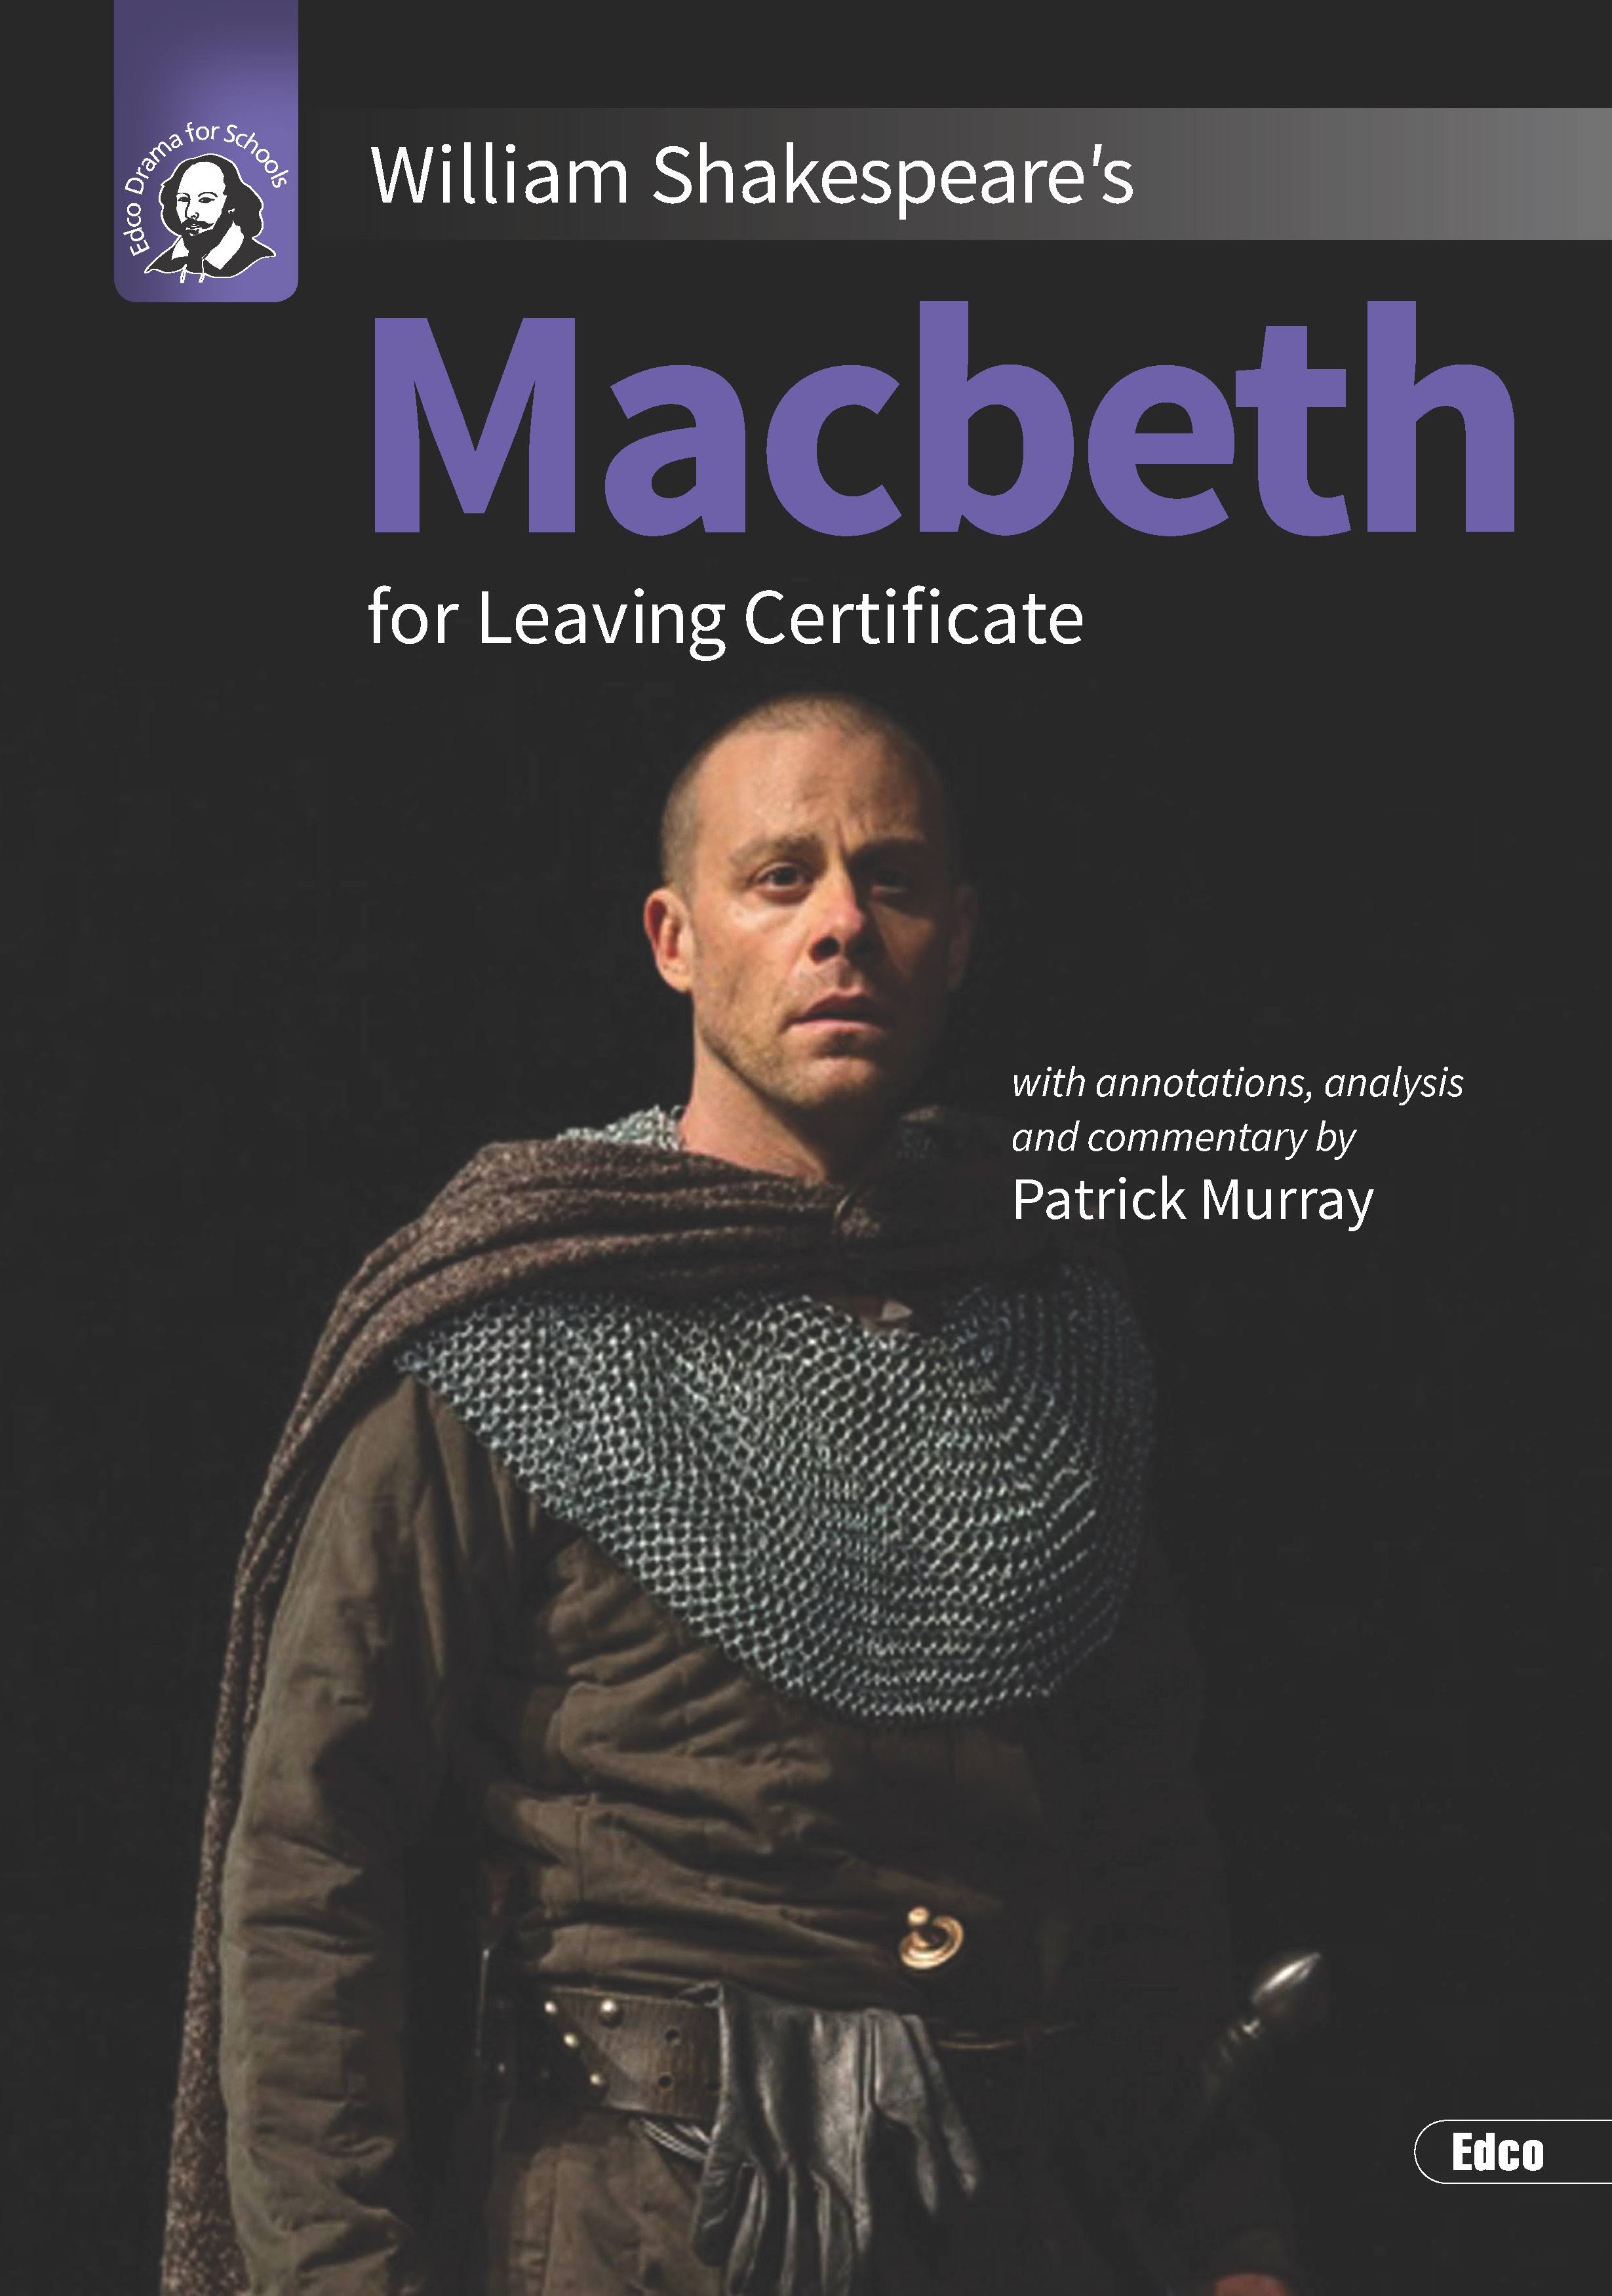 William Shakespeare's Macbeth for Leaving Certificate